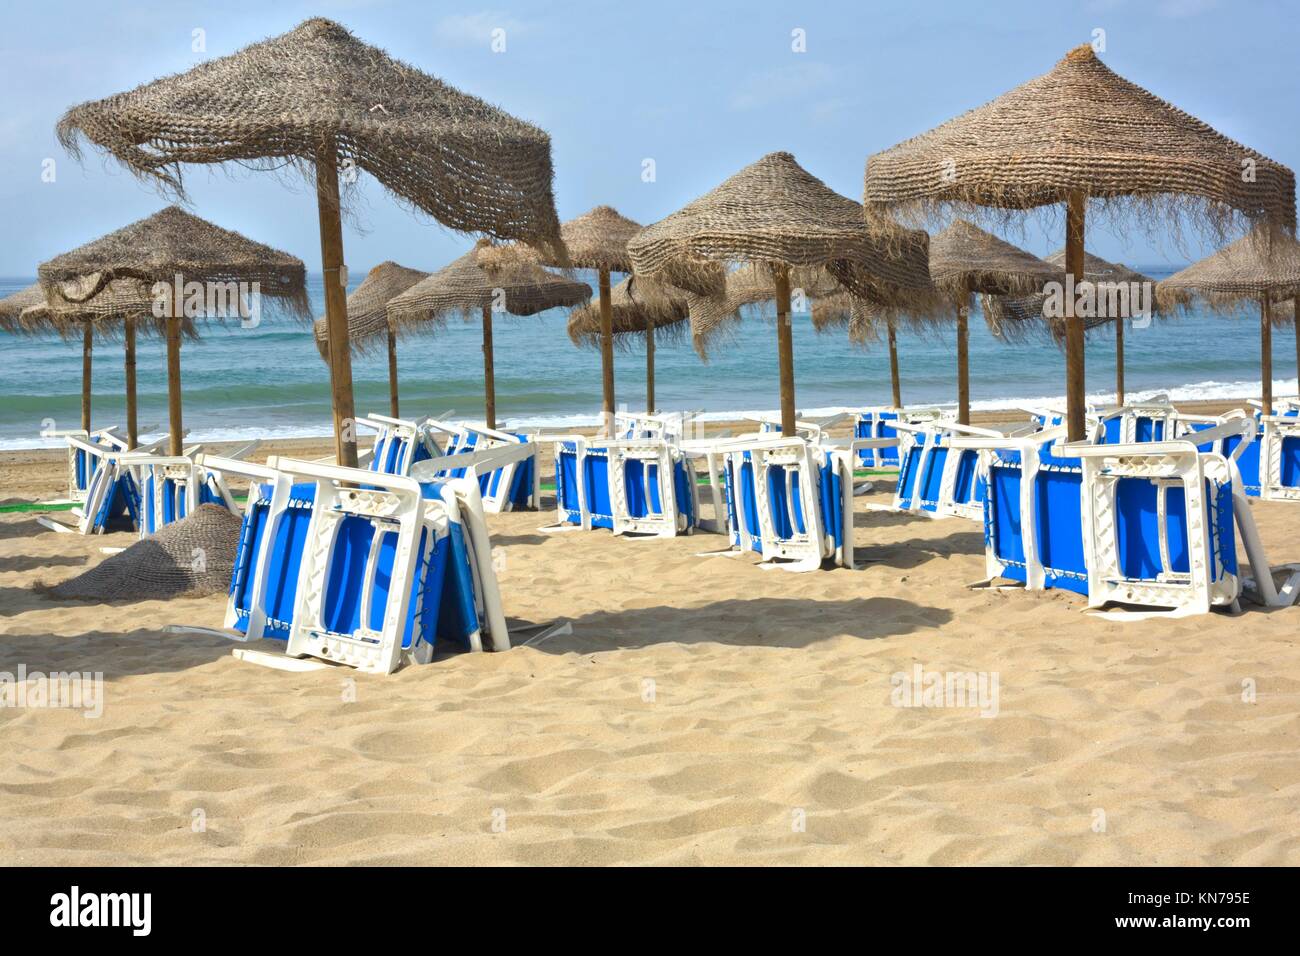 Rustic umbrellas made of natural fibers and sunbeds at Costa del Sol, Spain. Stock Photo